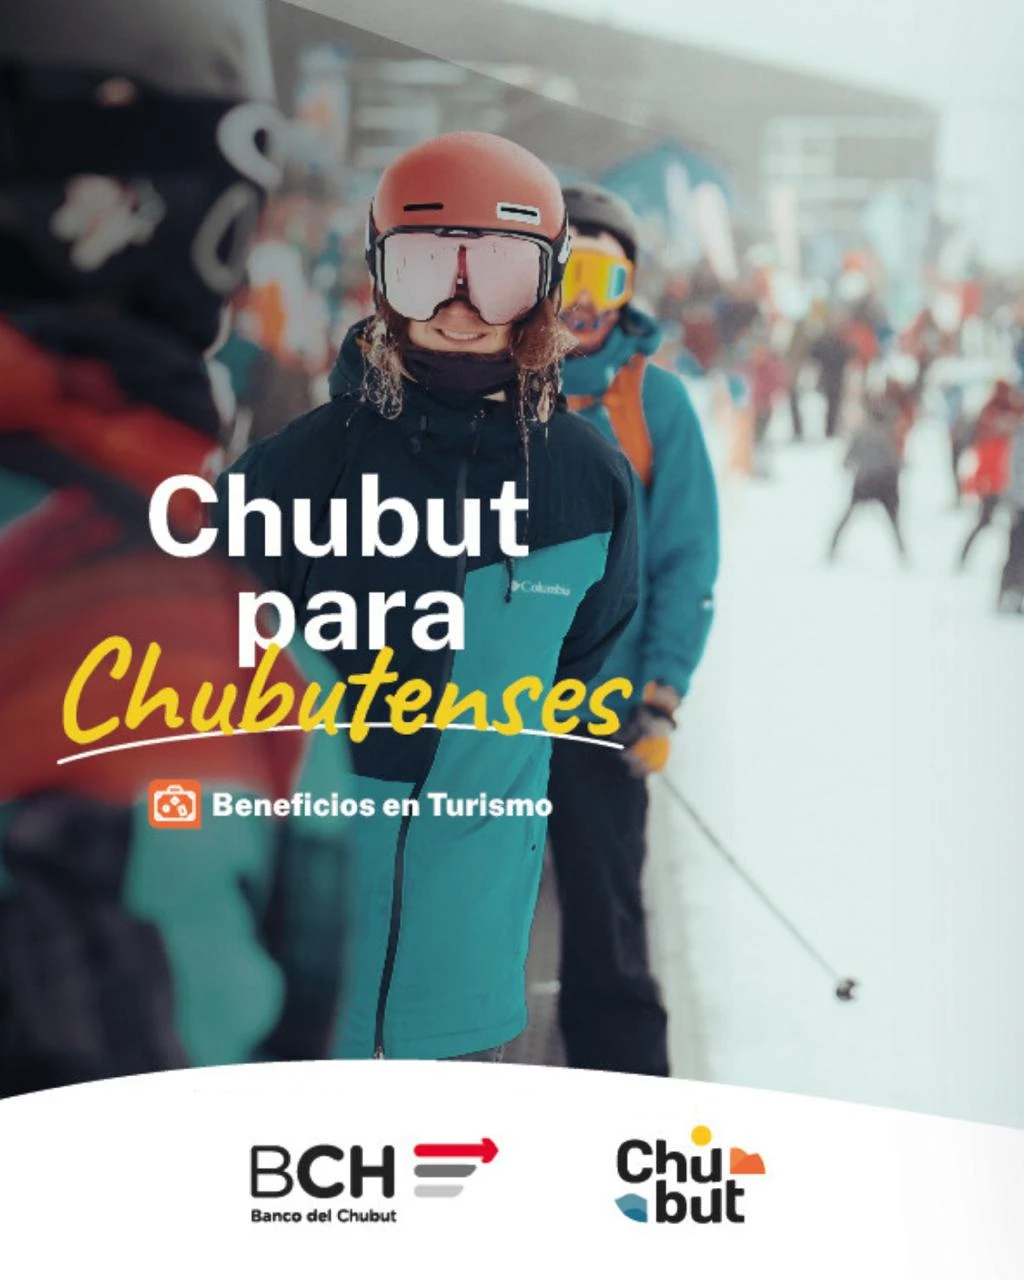 Chubut presentó el programa de beneficios “Chubut para Chubutenses”